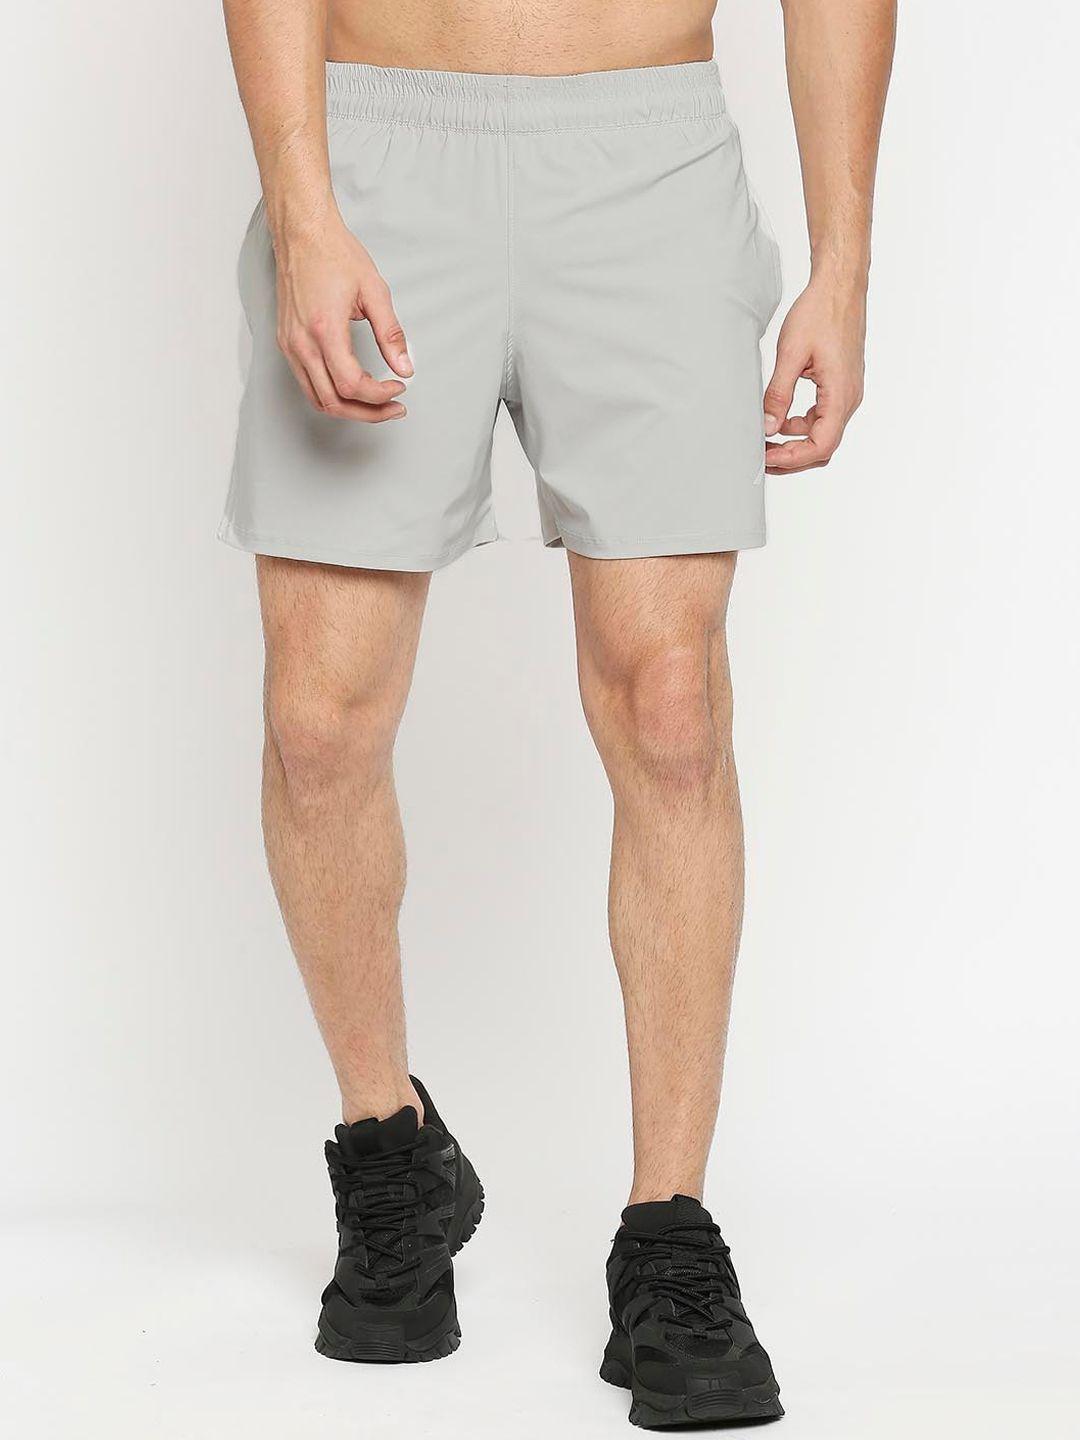 aesthetic nation men grey sports shorts